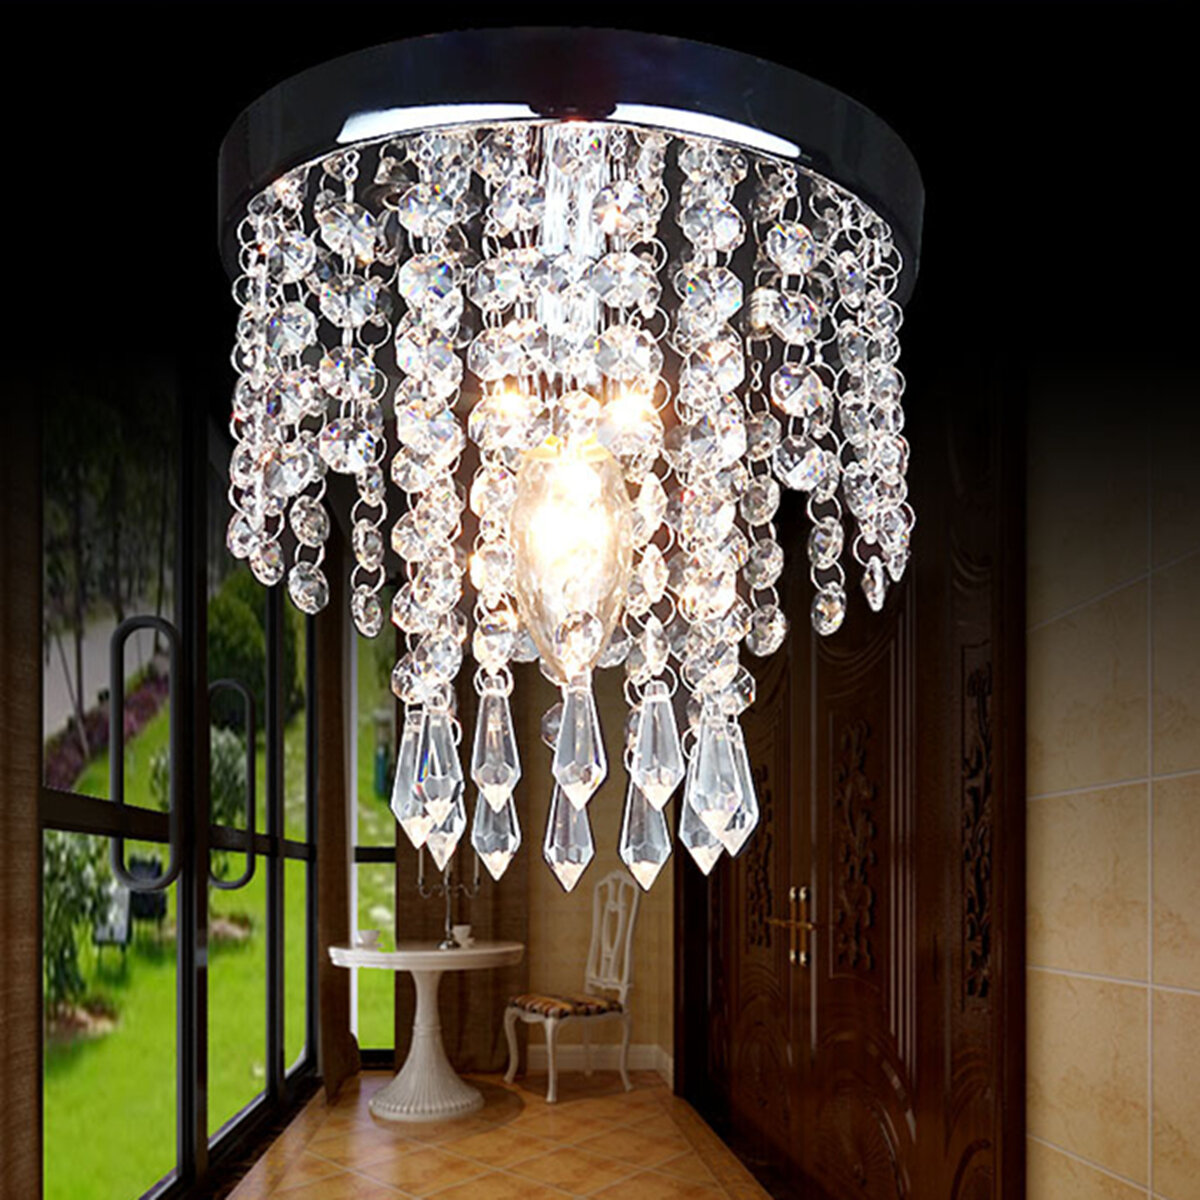 20 * 20cm gangpad slaapkamer kristallen kroonluchter hanglamp plafondlamp verlichtingsarmatuur